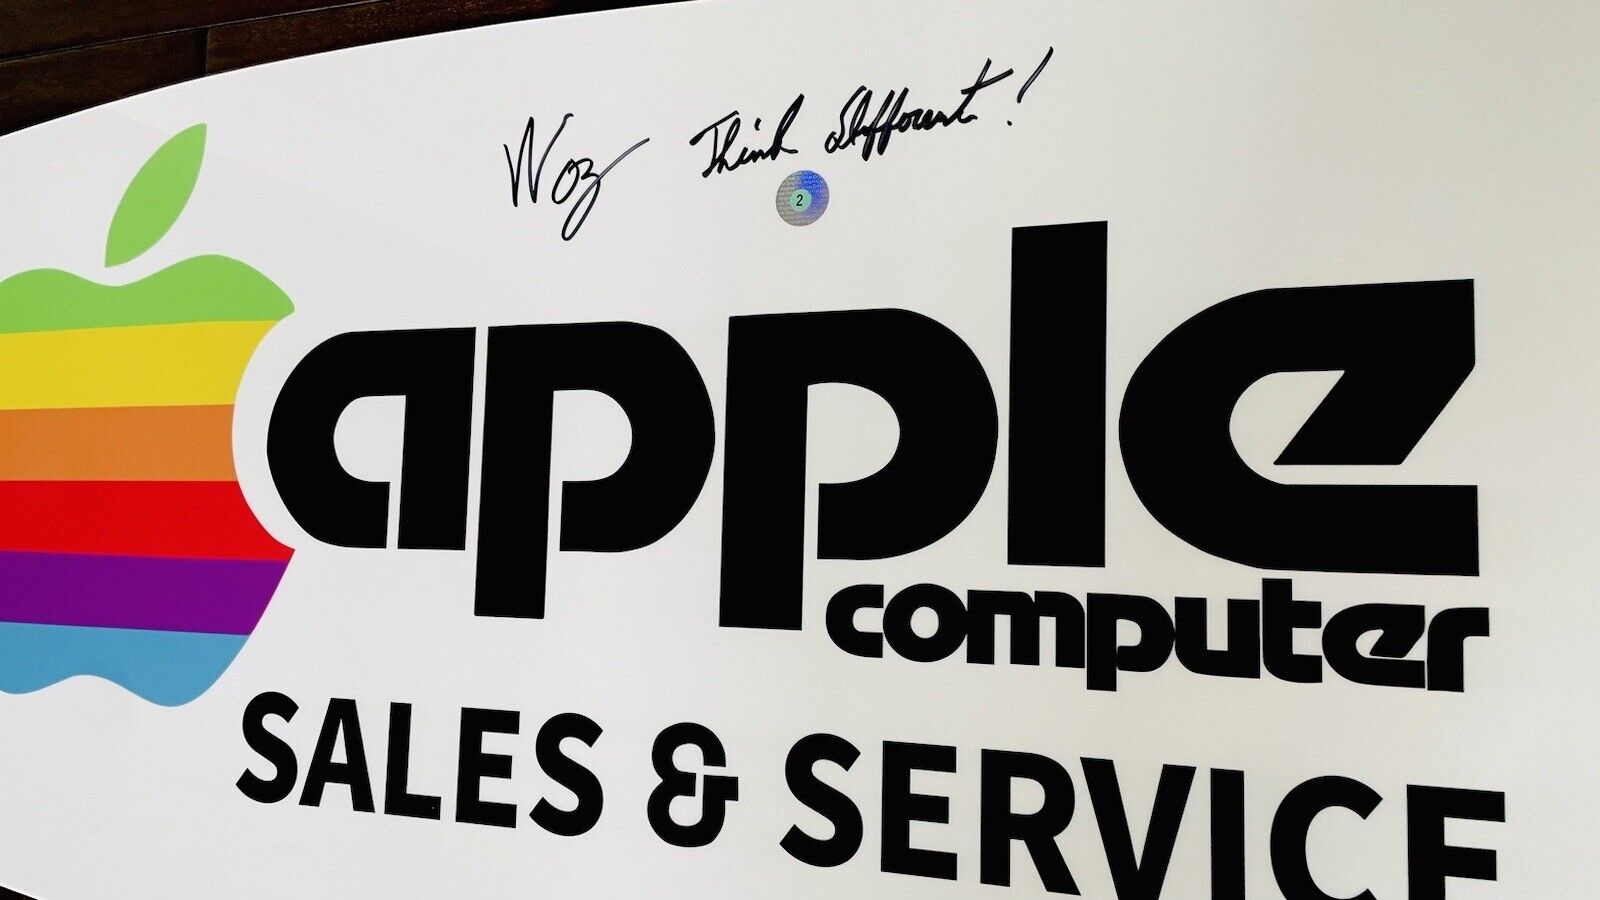 🔥 Steve Wozniak Signed Apple Computers Sign Dealer Store Macintosh Steve Jobs